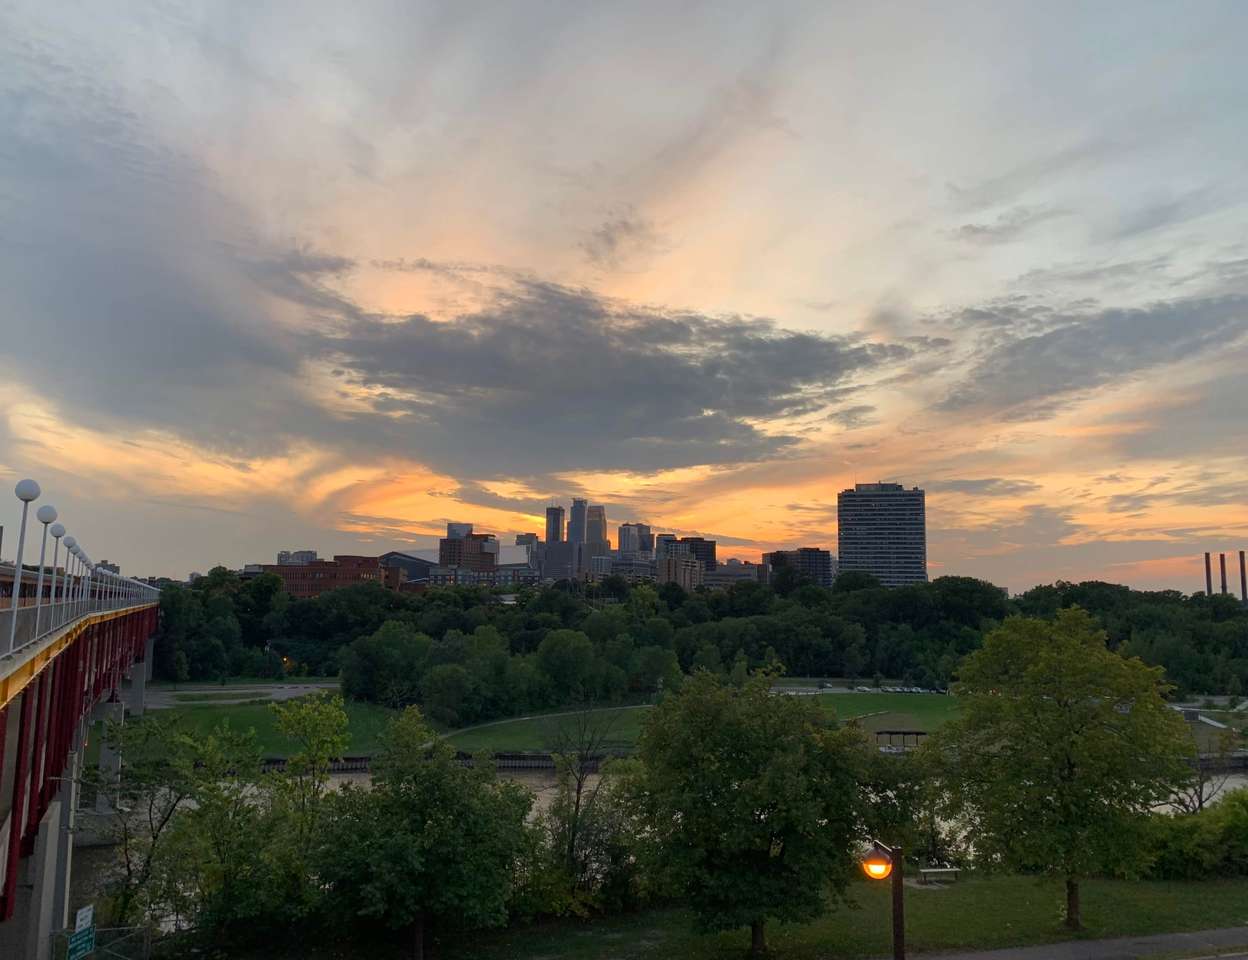 Atardecer y nubes del horizonte de Minneapolis puzzle online a partir de foto